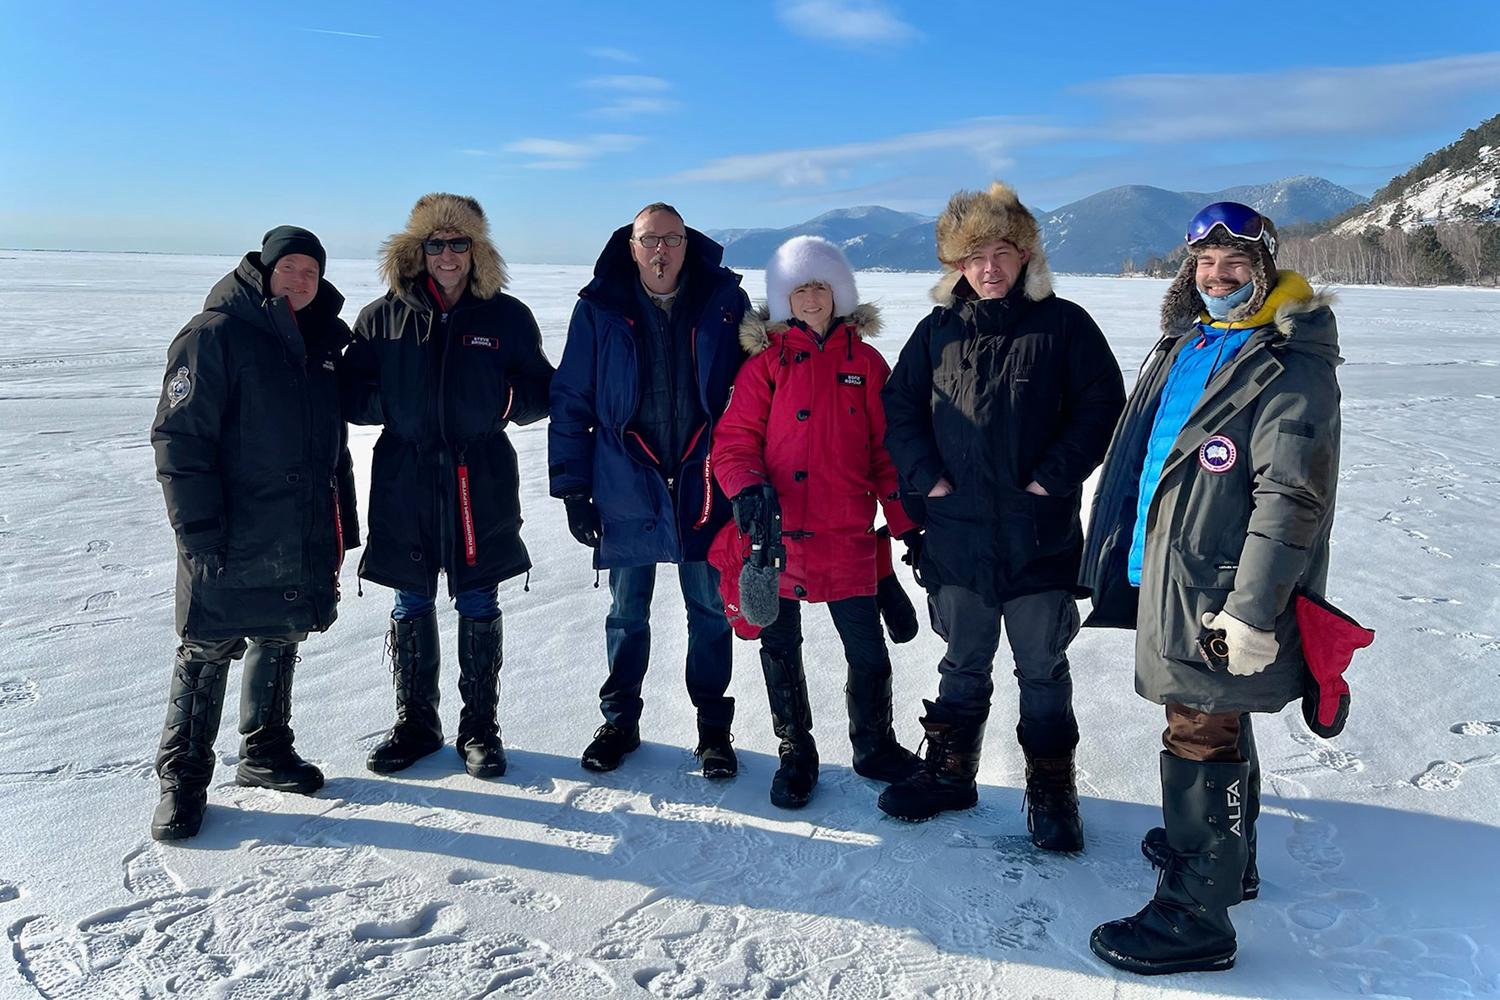 The DefenderX team on frozen Lake Baikal in Russia, including Mikael Strandberg, Steve Brooks, Jeff Willner, Sofie Rørdam, Edward Adrian-Vallance and Misha Vikhrov.